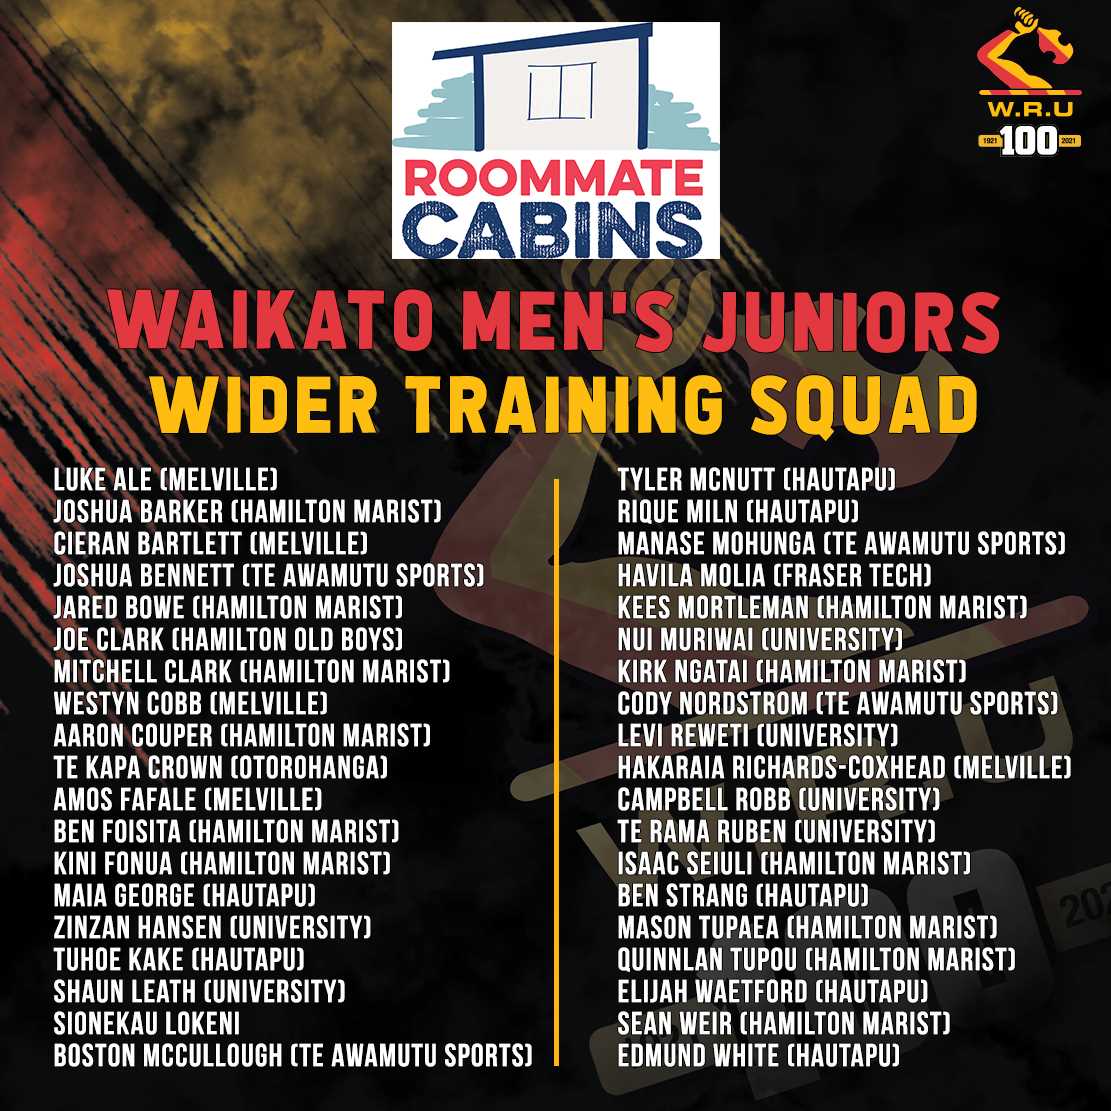 2021 Roommate Cabins: Waikato Men’s Juniors Wider Training Squad Announced